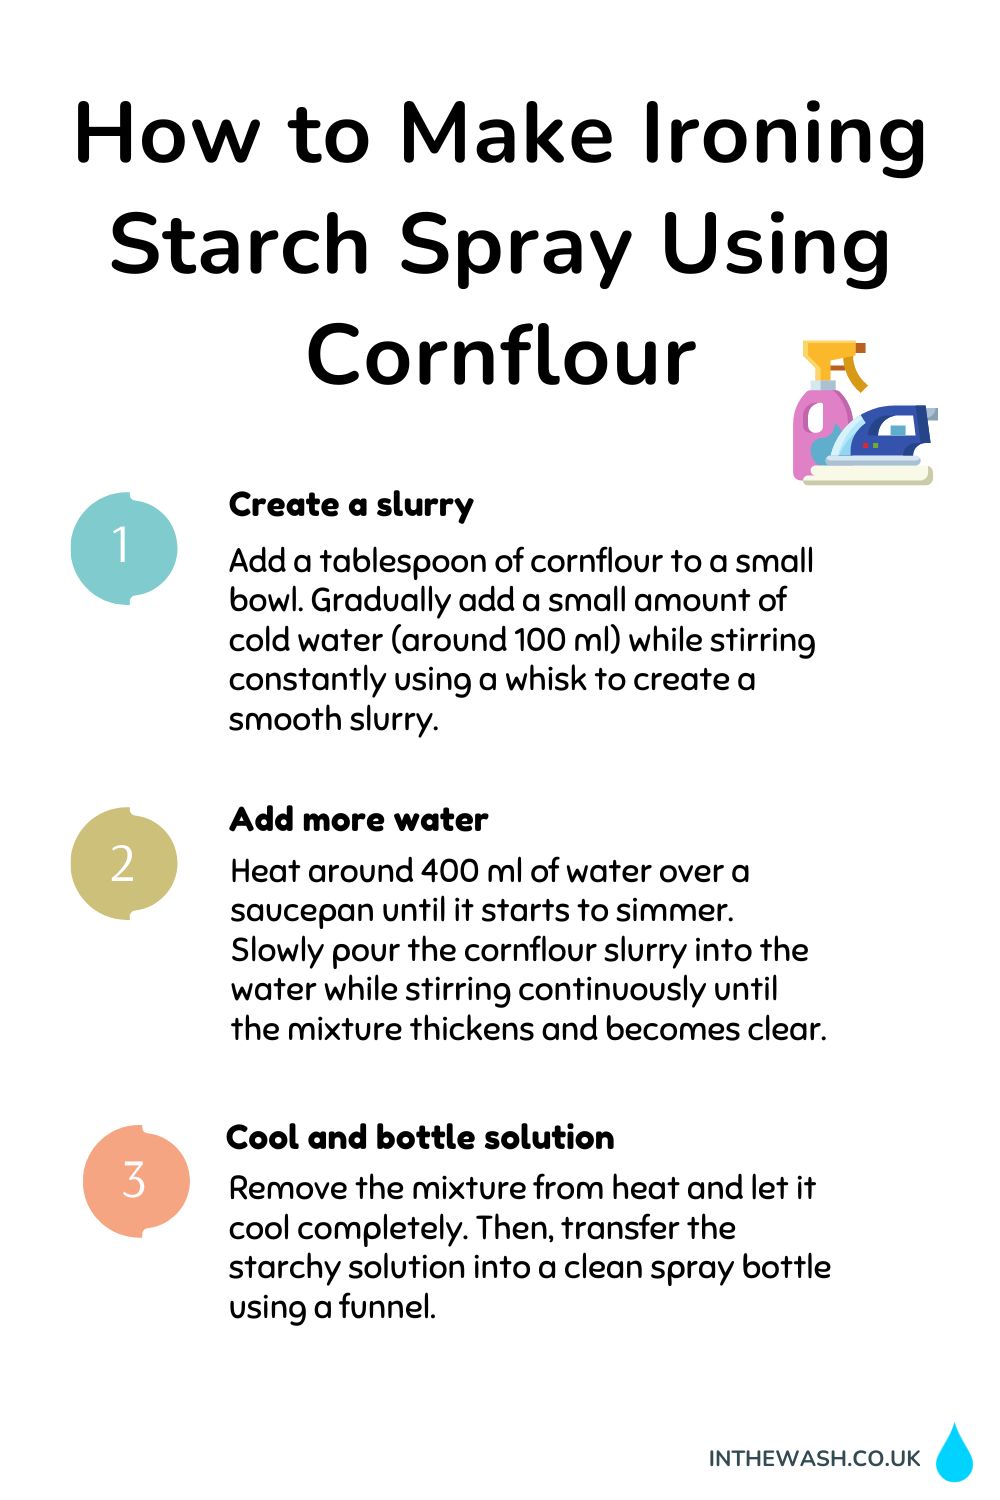 How to make ironing starch using cornflour